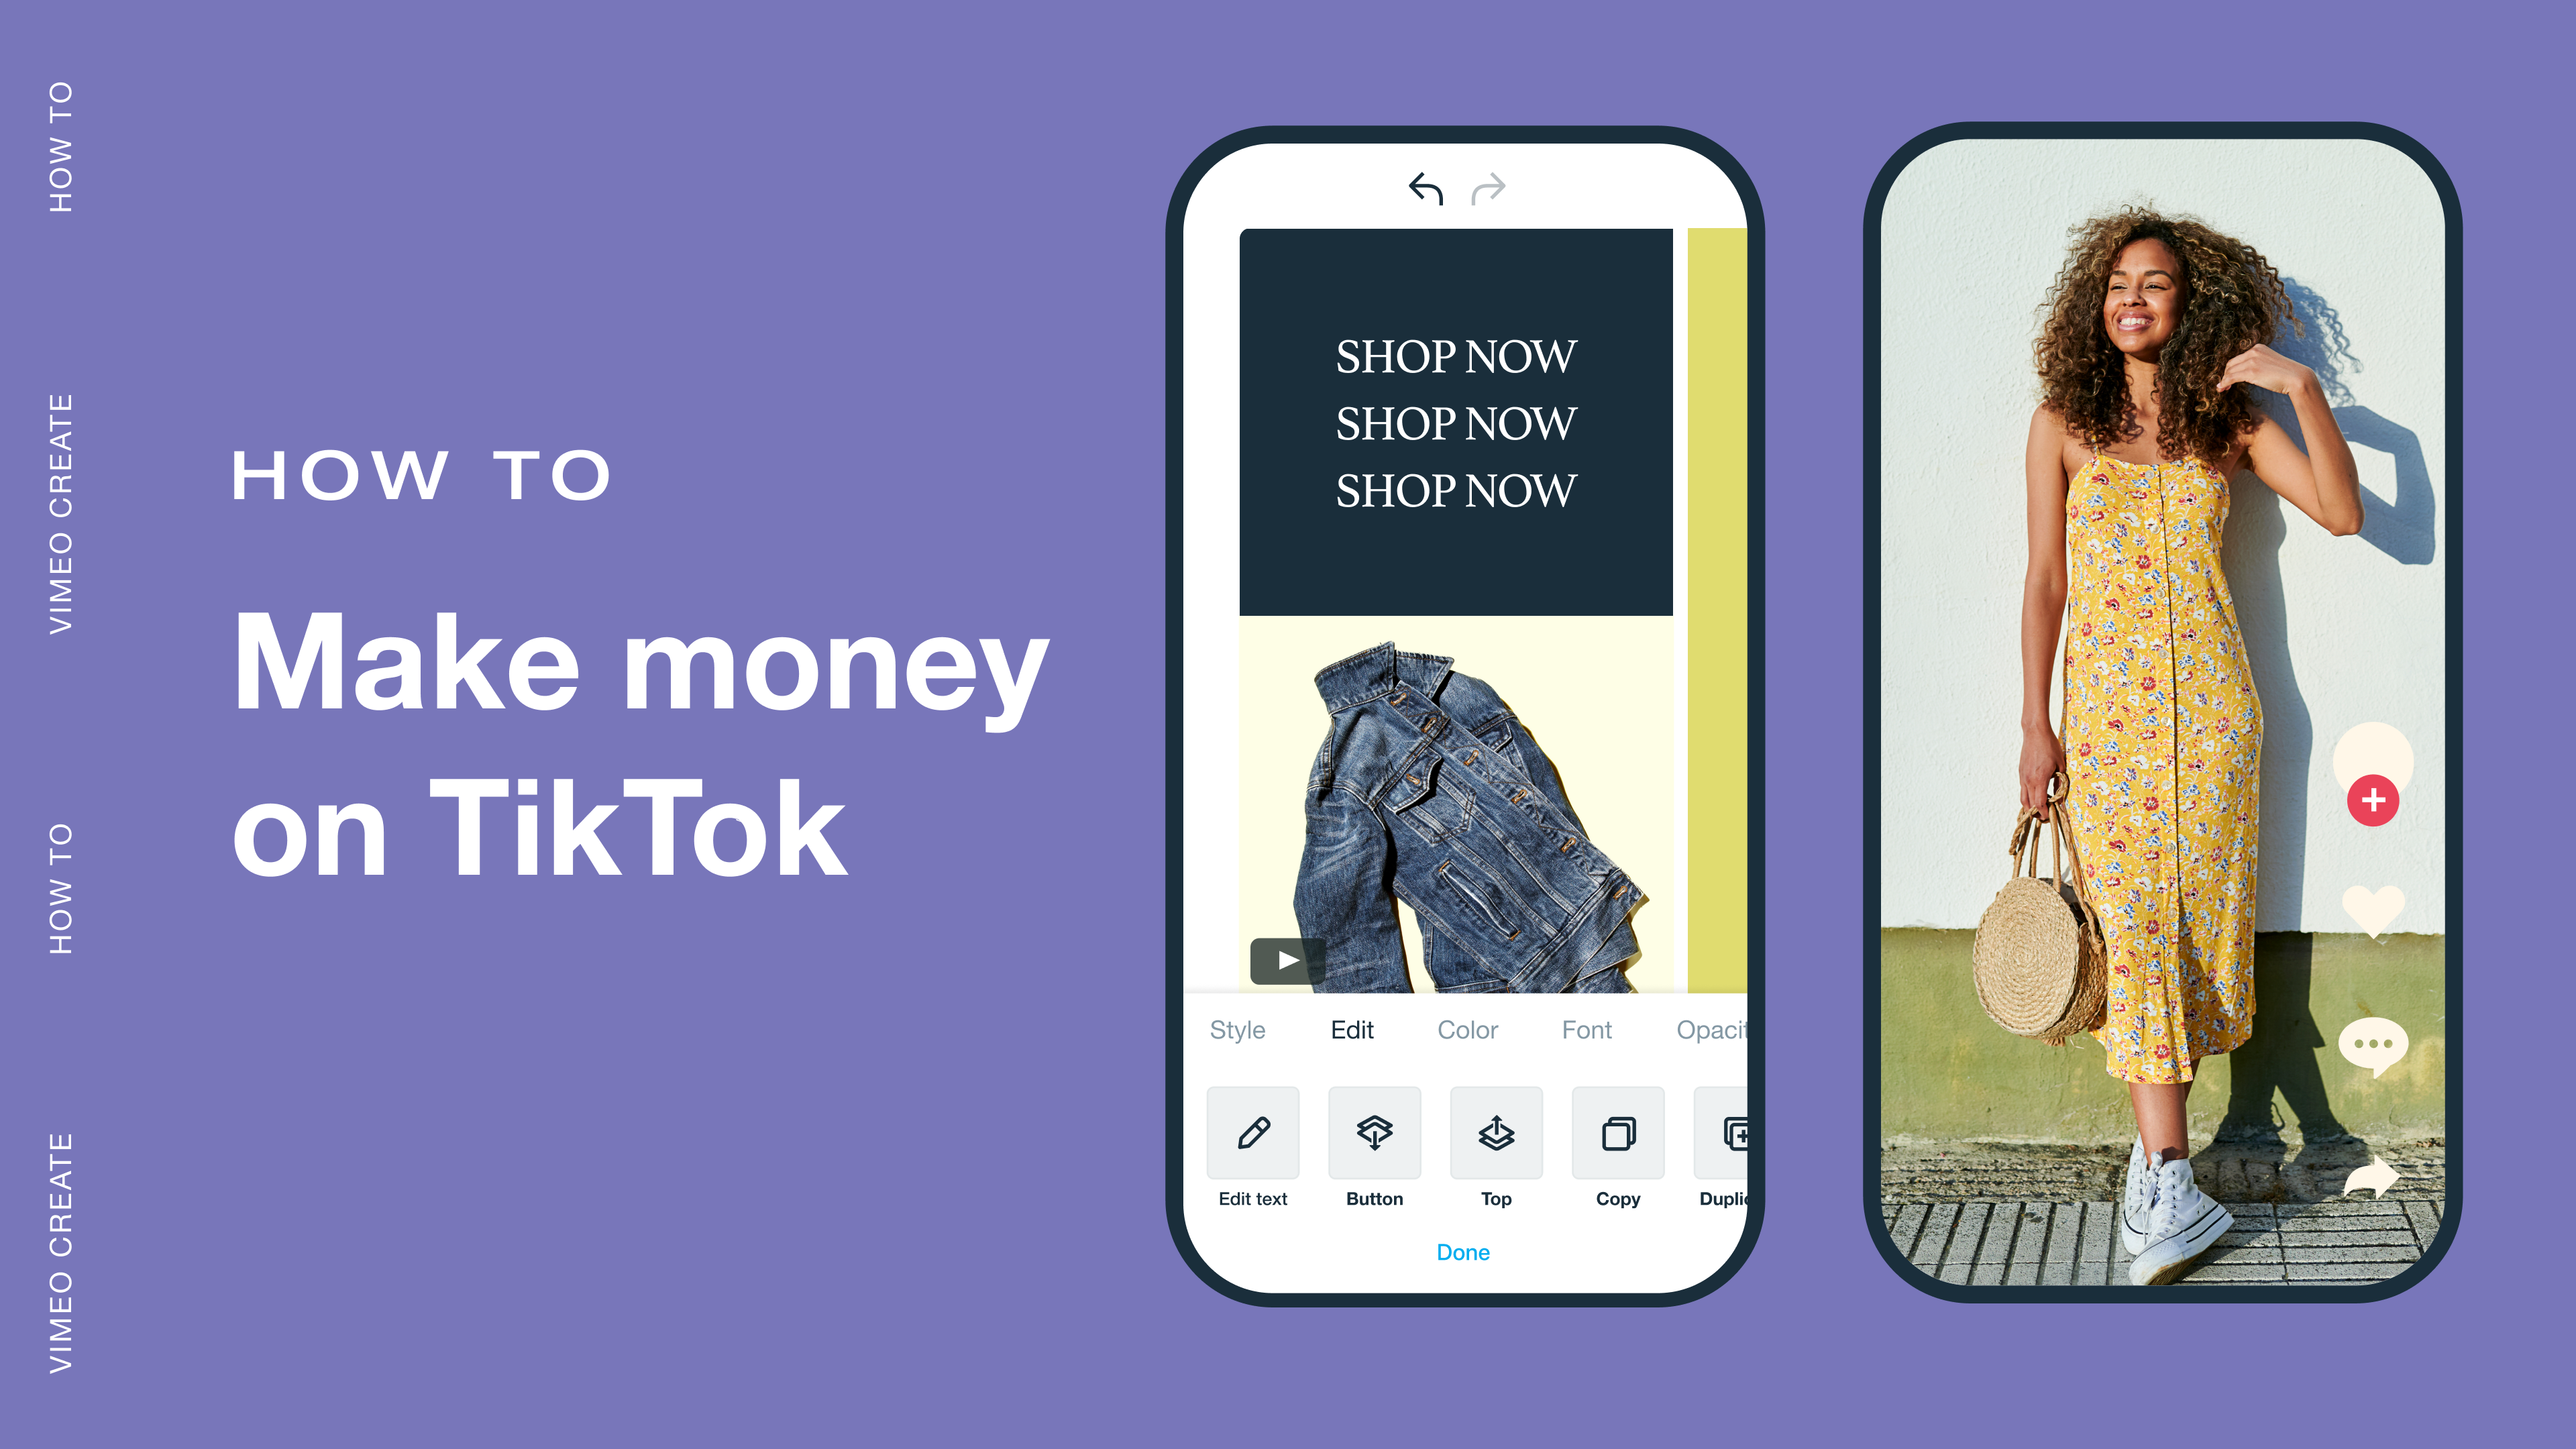 How to Make Money on TikTok: Monetization for Small Businesses | Vimeo